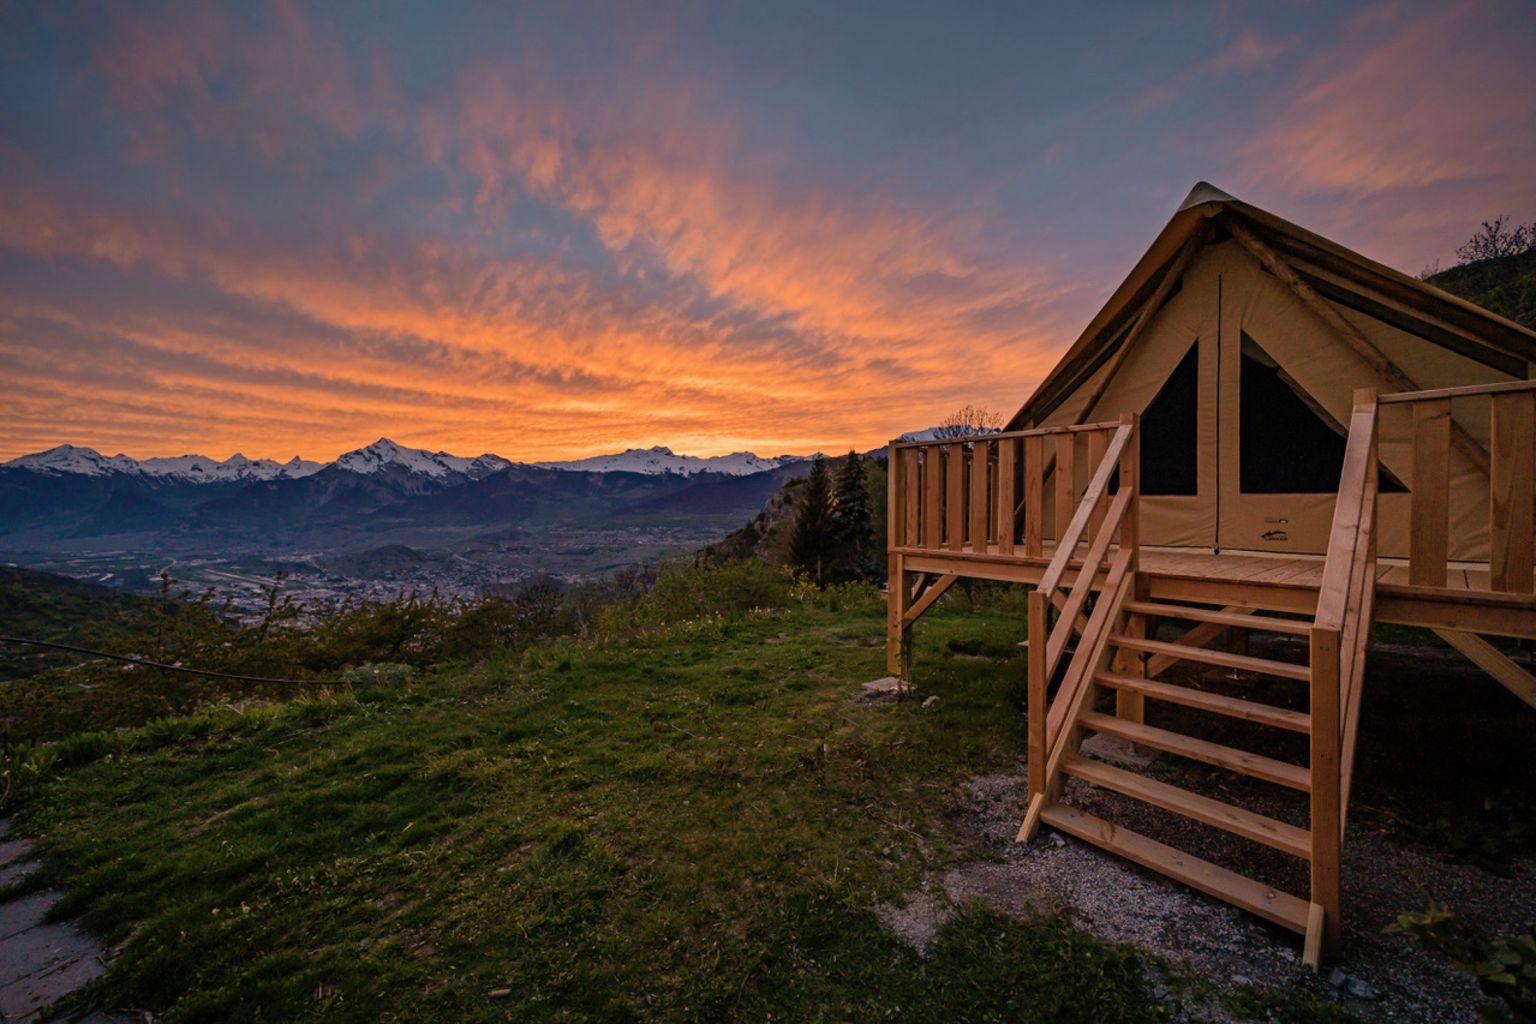 The accommodation Alp Safari Nax in the evening with sunset, Valais, Switzerland